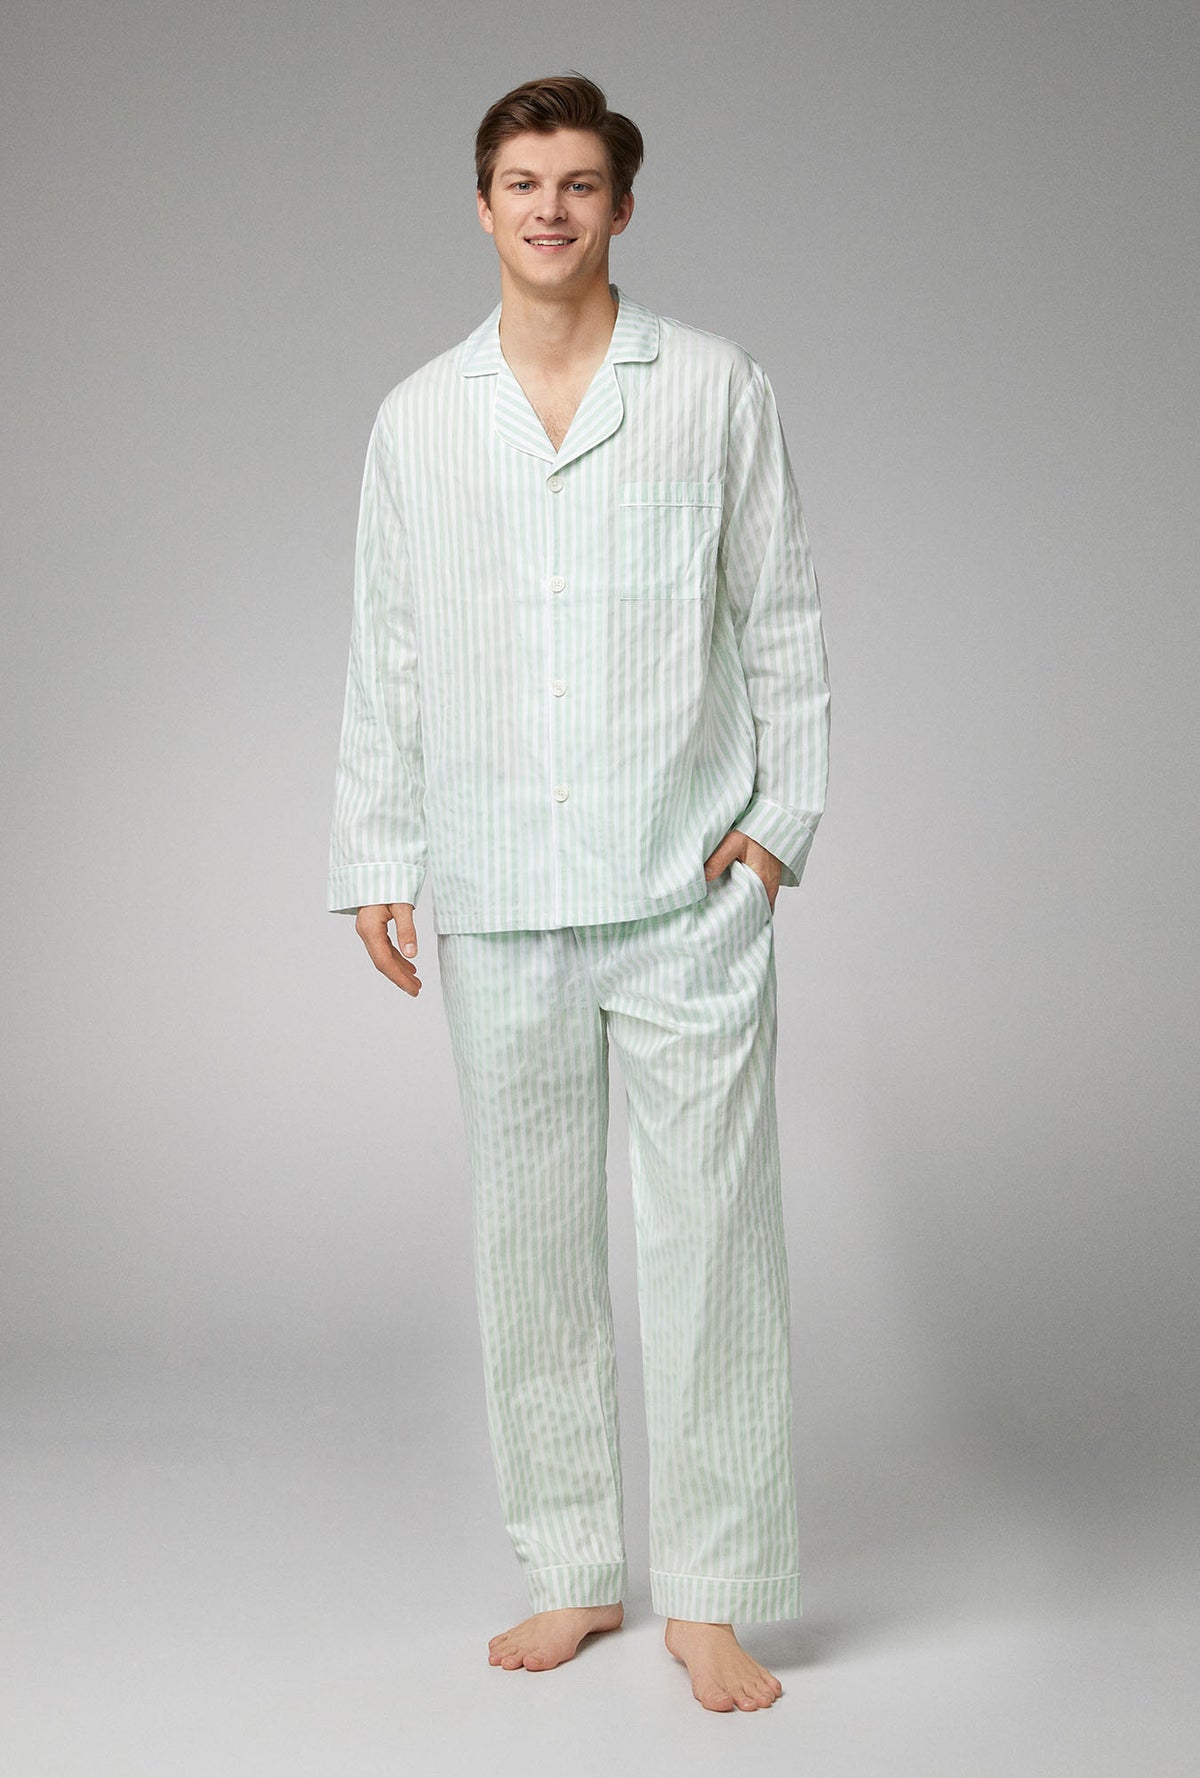 Classic Silk Men's Pajamas, Silk Pajama Sets for Men